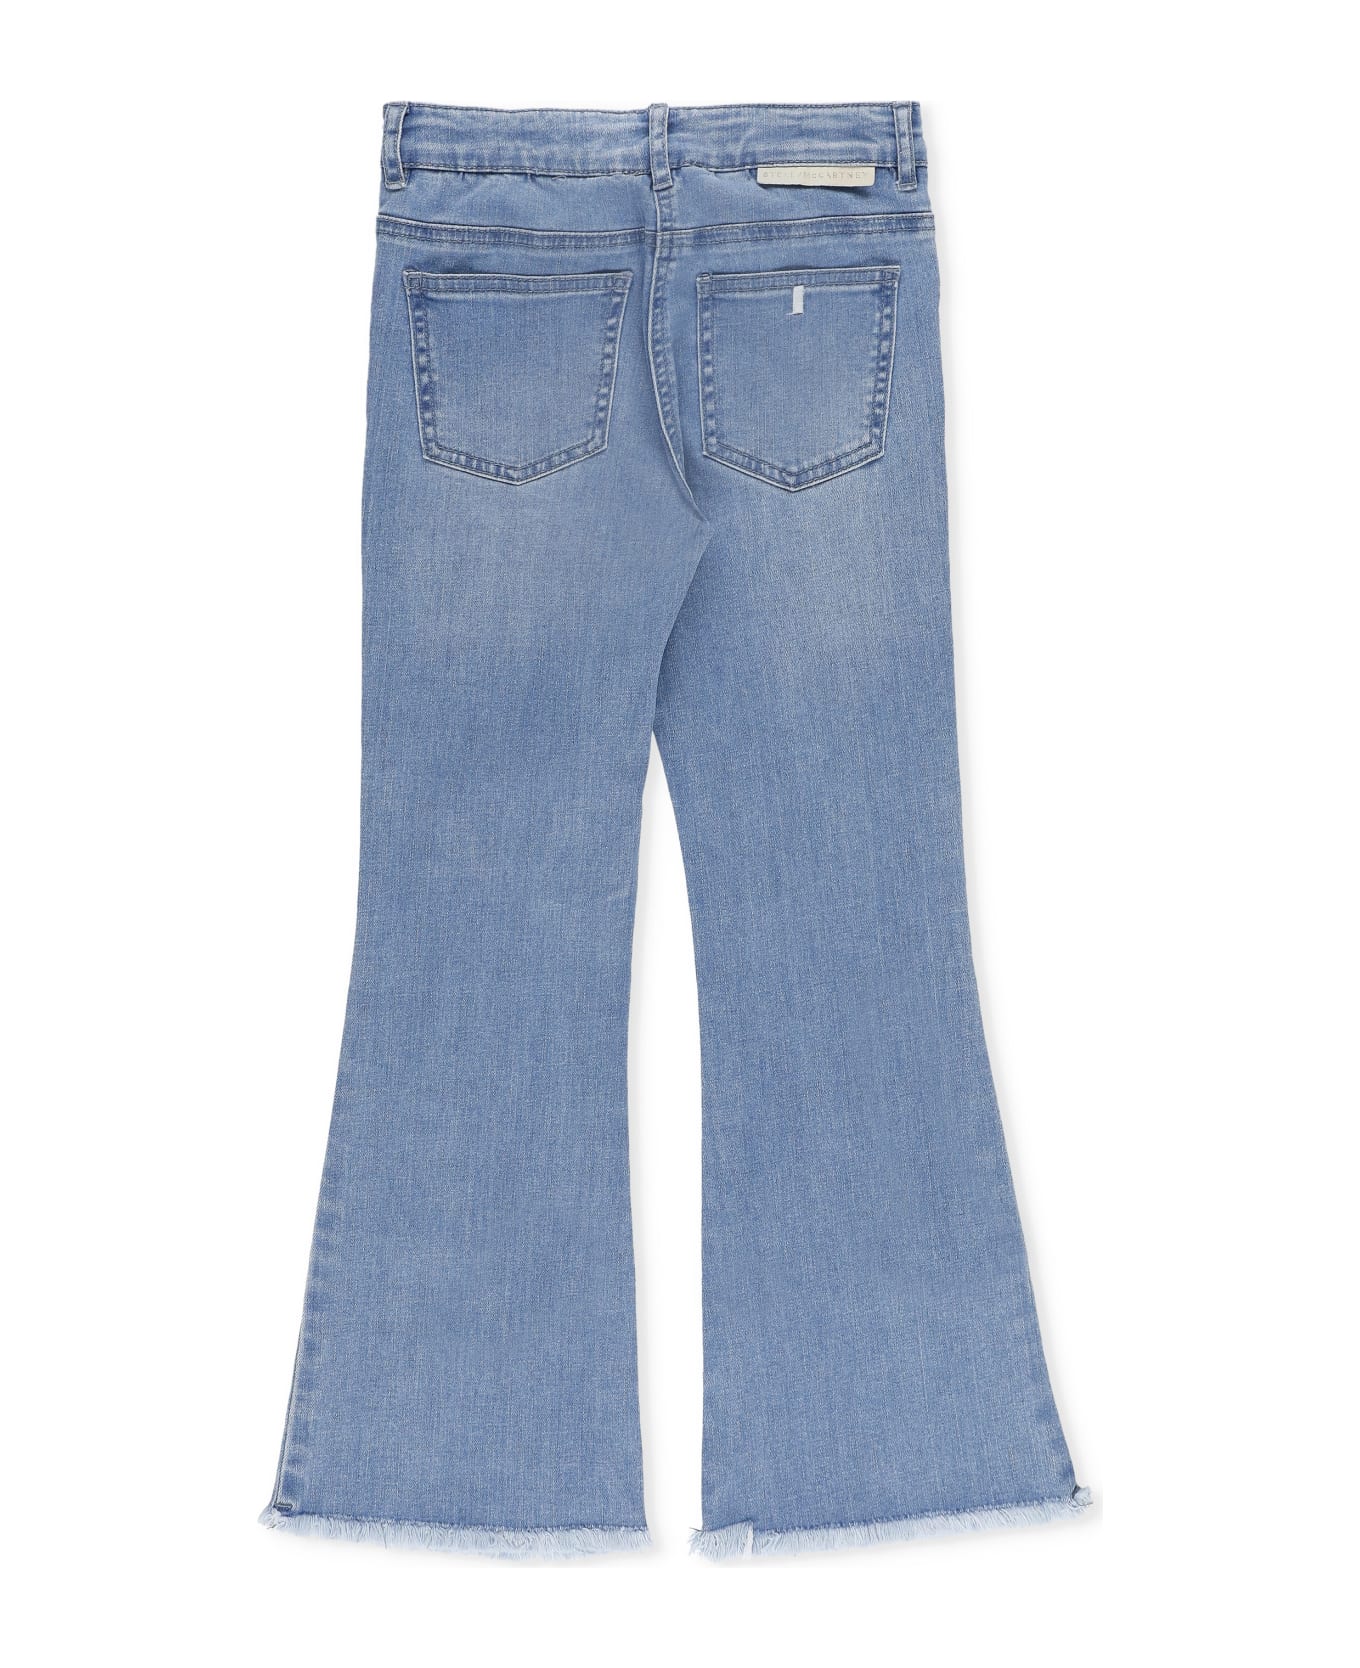 Stella McCartney Cotton Jeans - Light Blue ボトムス